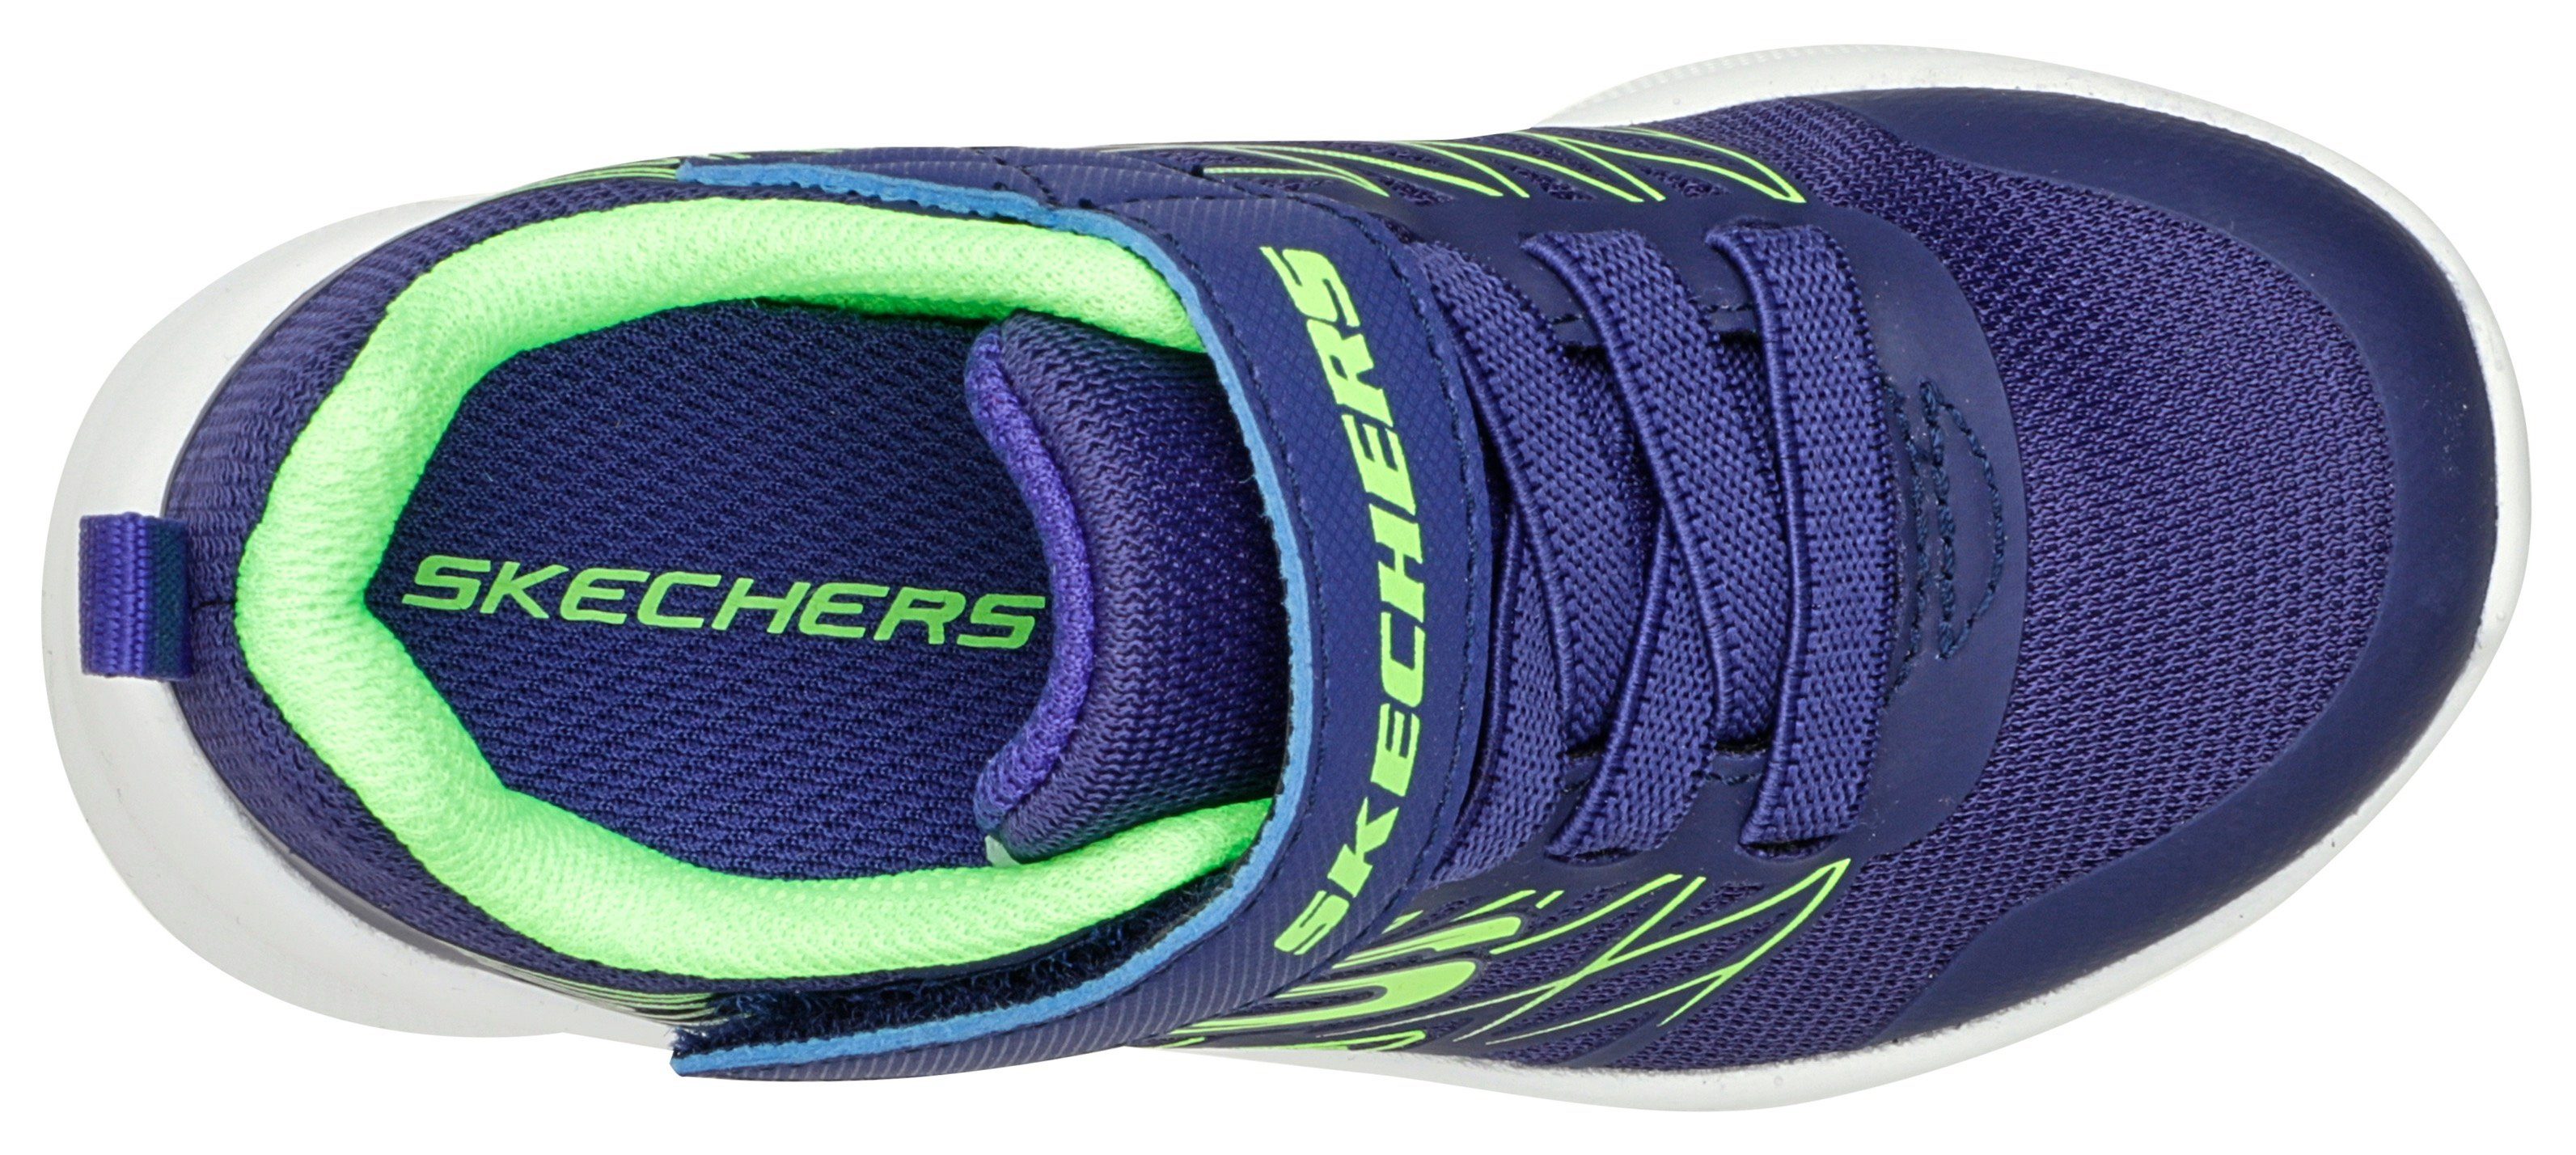 Skechers Kids MICROSPEC TEXLOR Sneaker Laufsohle leichter mit